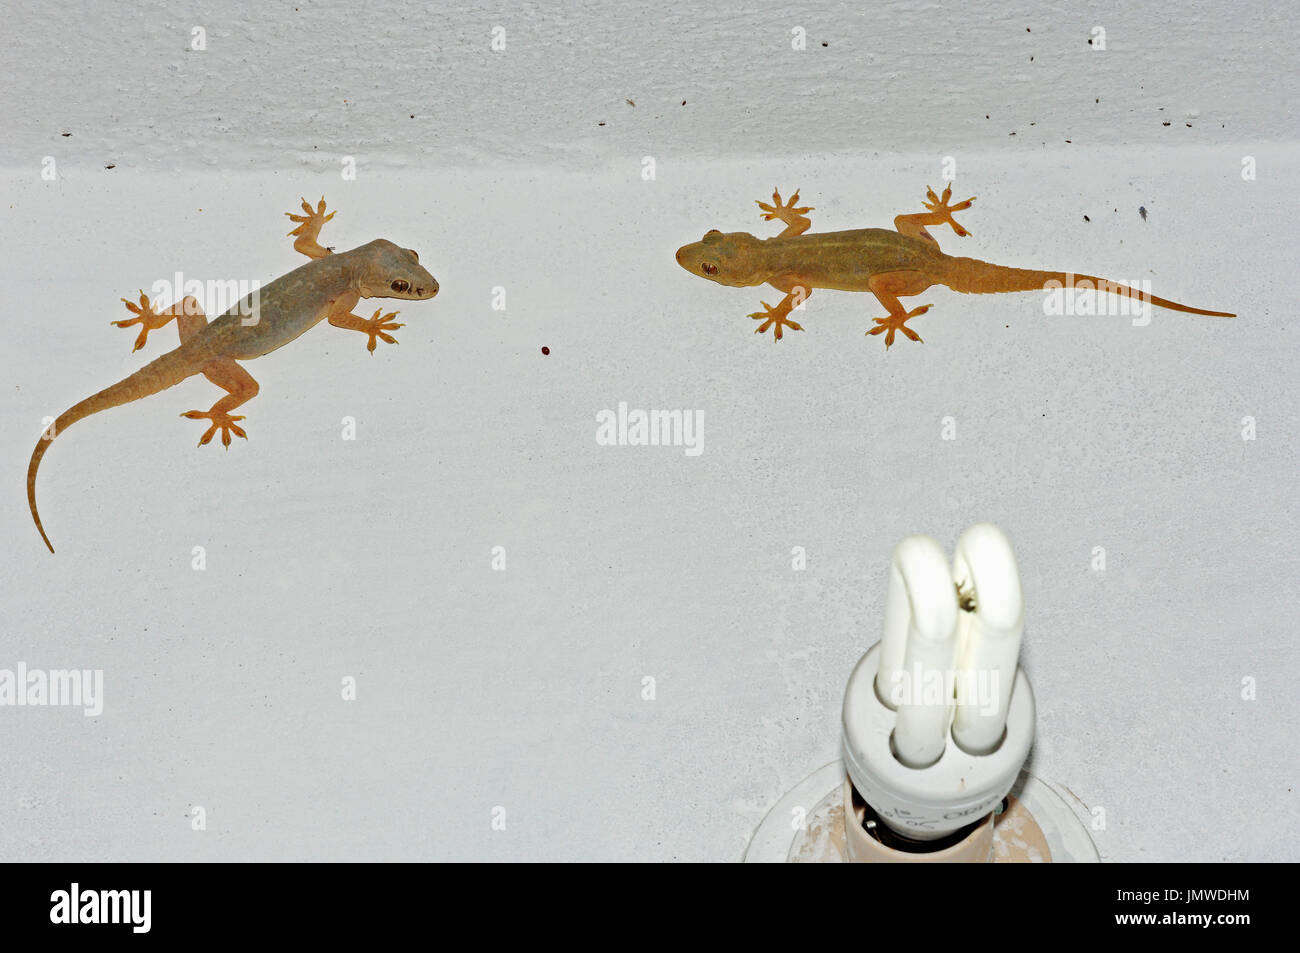 Common House Geckos on house wall, Rajasthan, India / (Hemidactylus  frenatus) / Spiny-tailed House Gecko | Asiatische Hausgeckos und Lampe  Stock Photo - Alamy